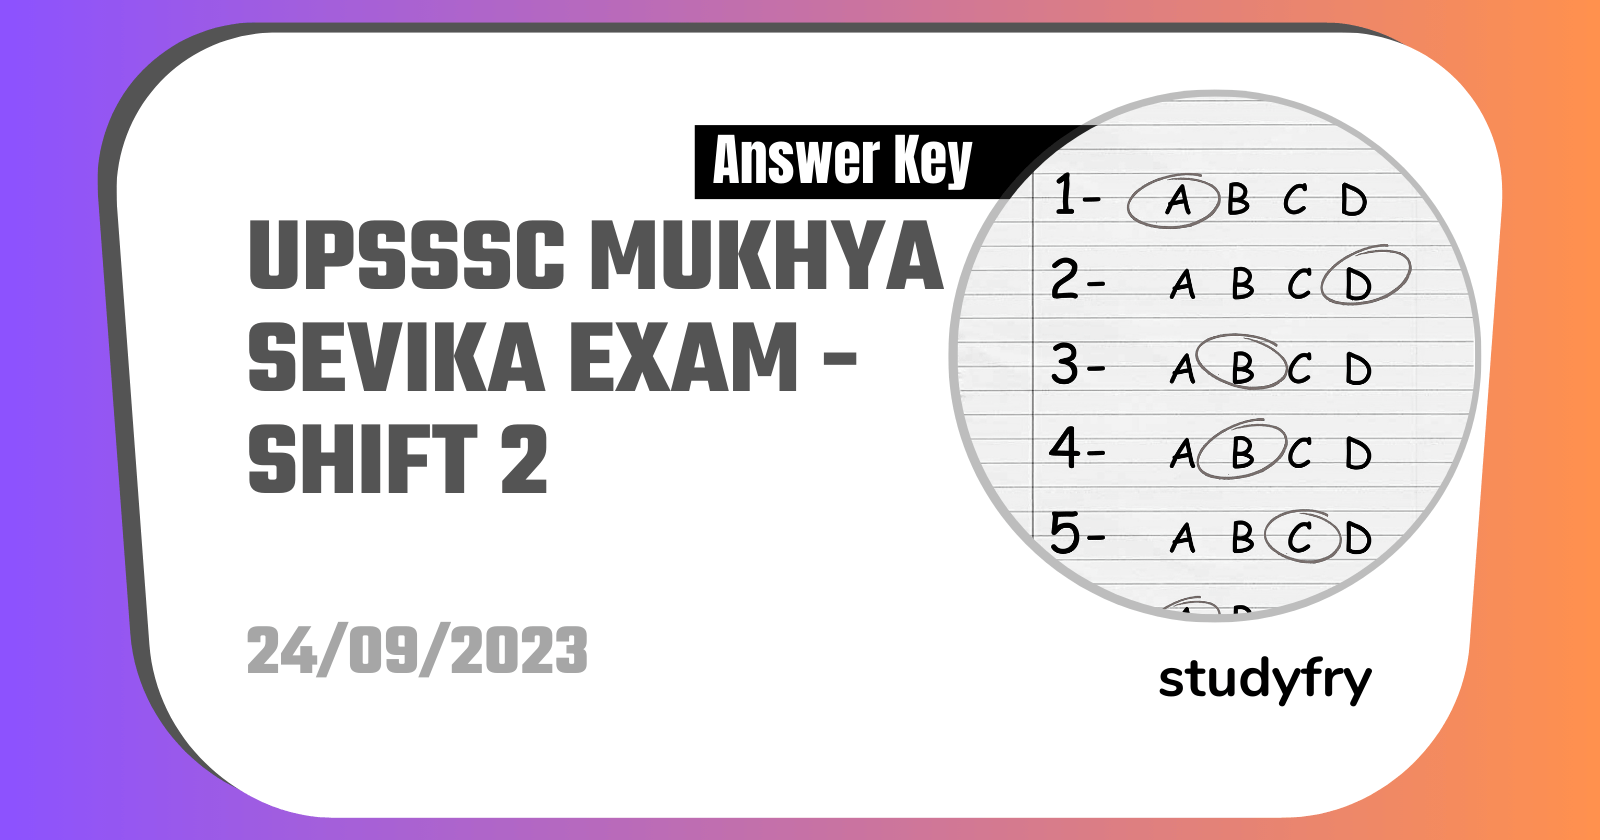 UPSSSC Mukhya Sevika Exam Paper 24 September 2023 - Second Shift Official Answer Key